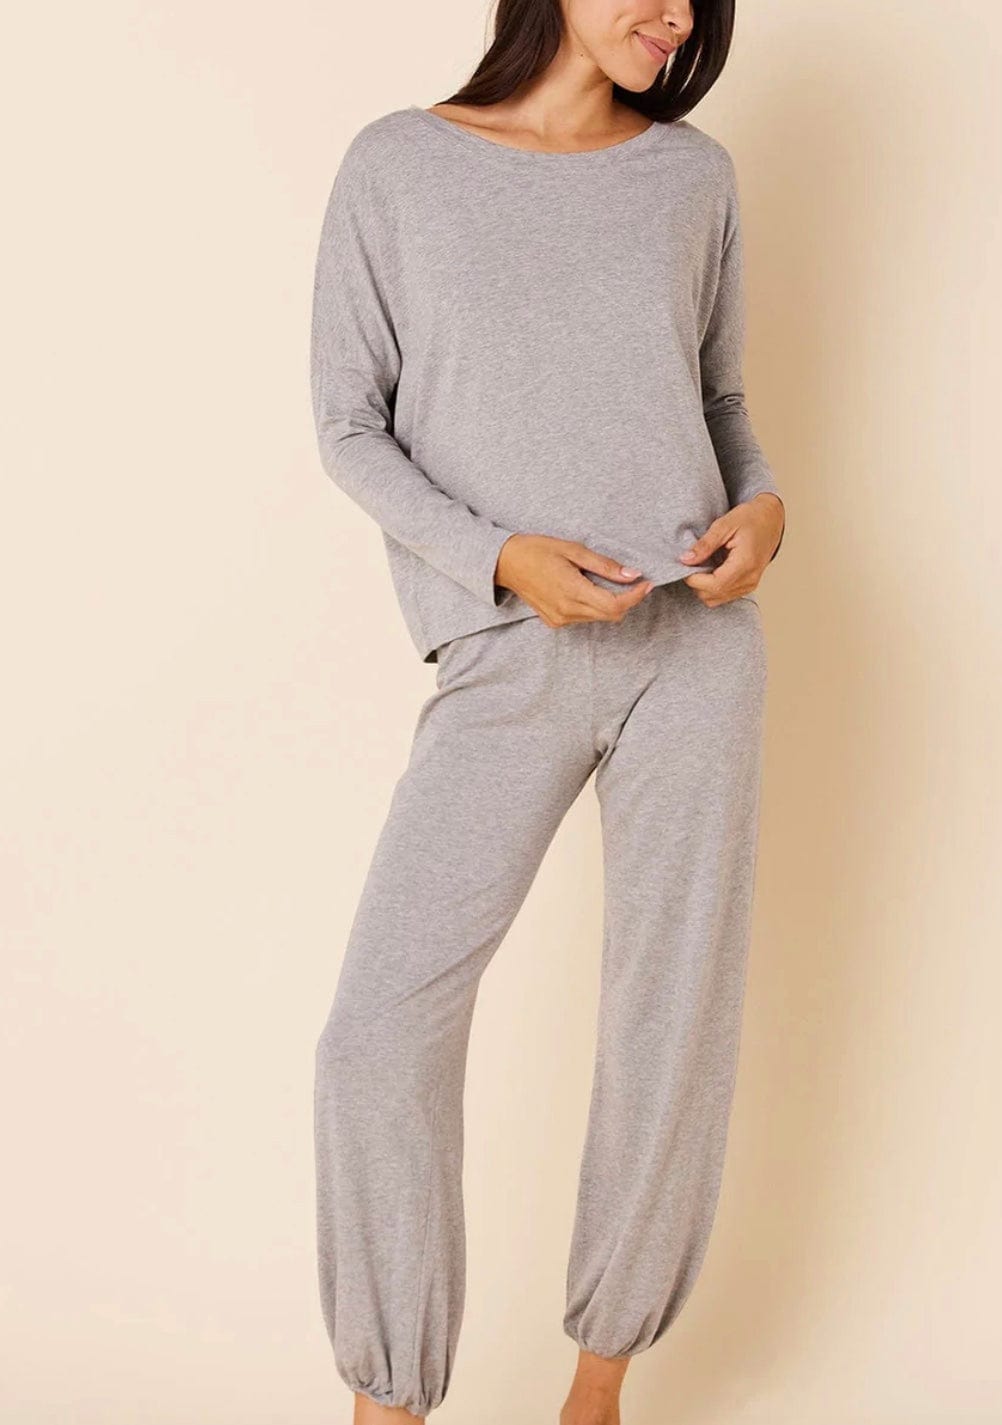 WEILEA Pajamas Set For Women，Fashion Gray Cartoon Cactus Winter